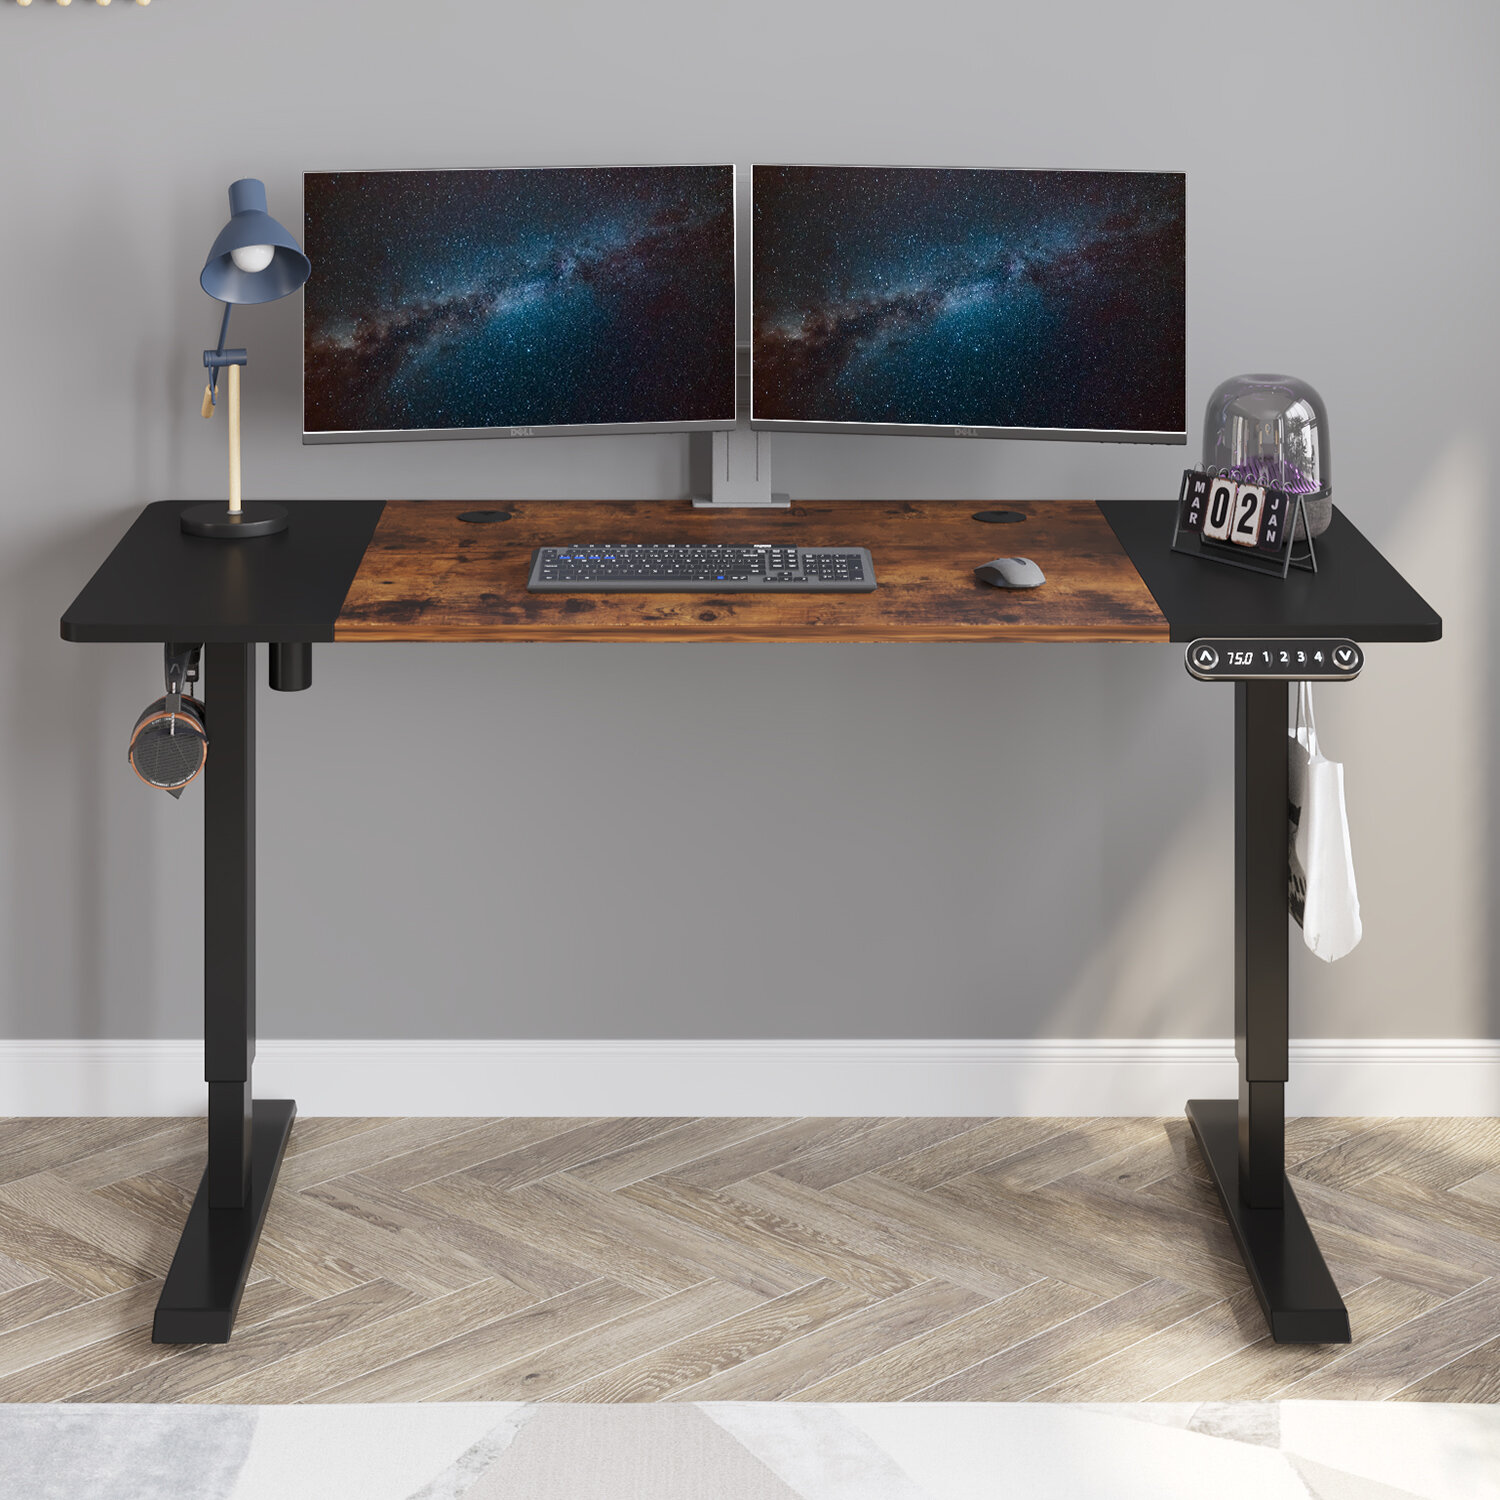 Eureka Ergonomic Standing Desk Anti-Fatique Comfort Floor Mat